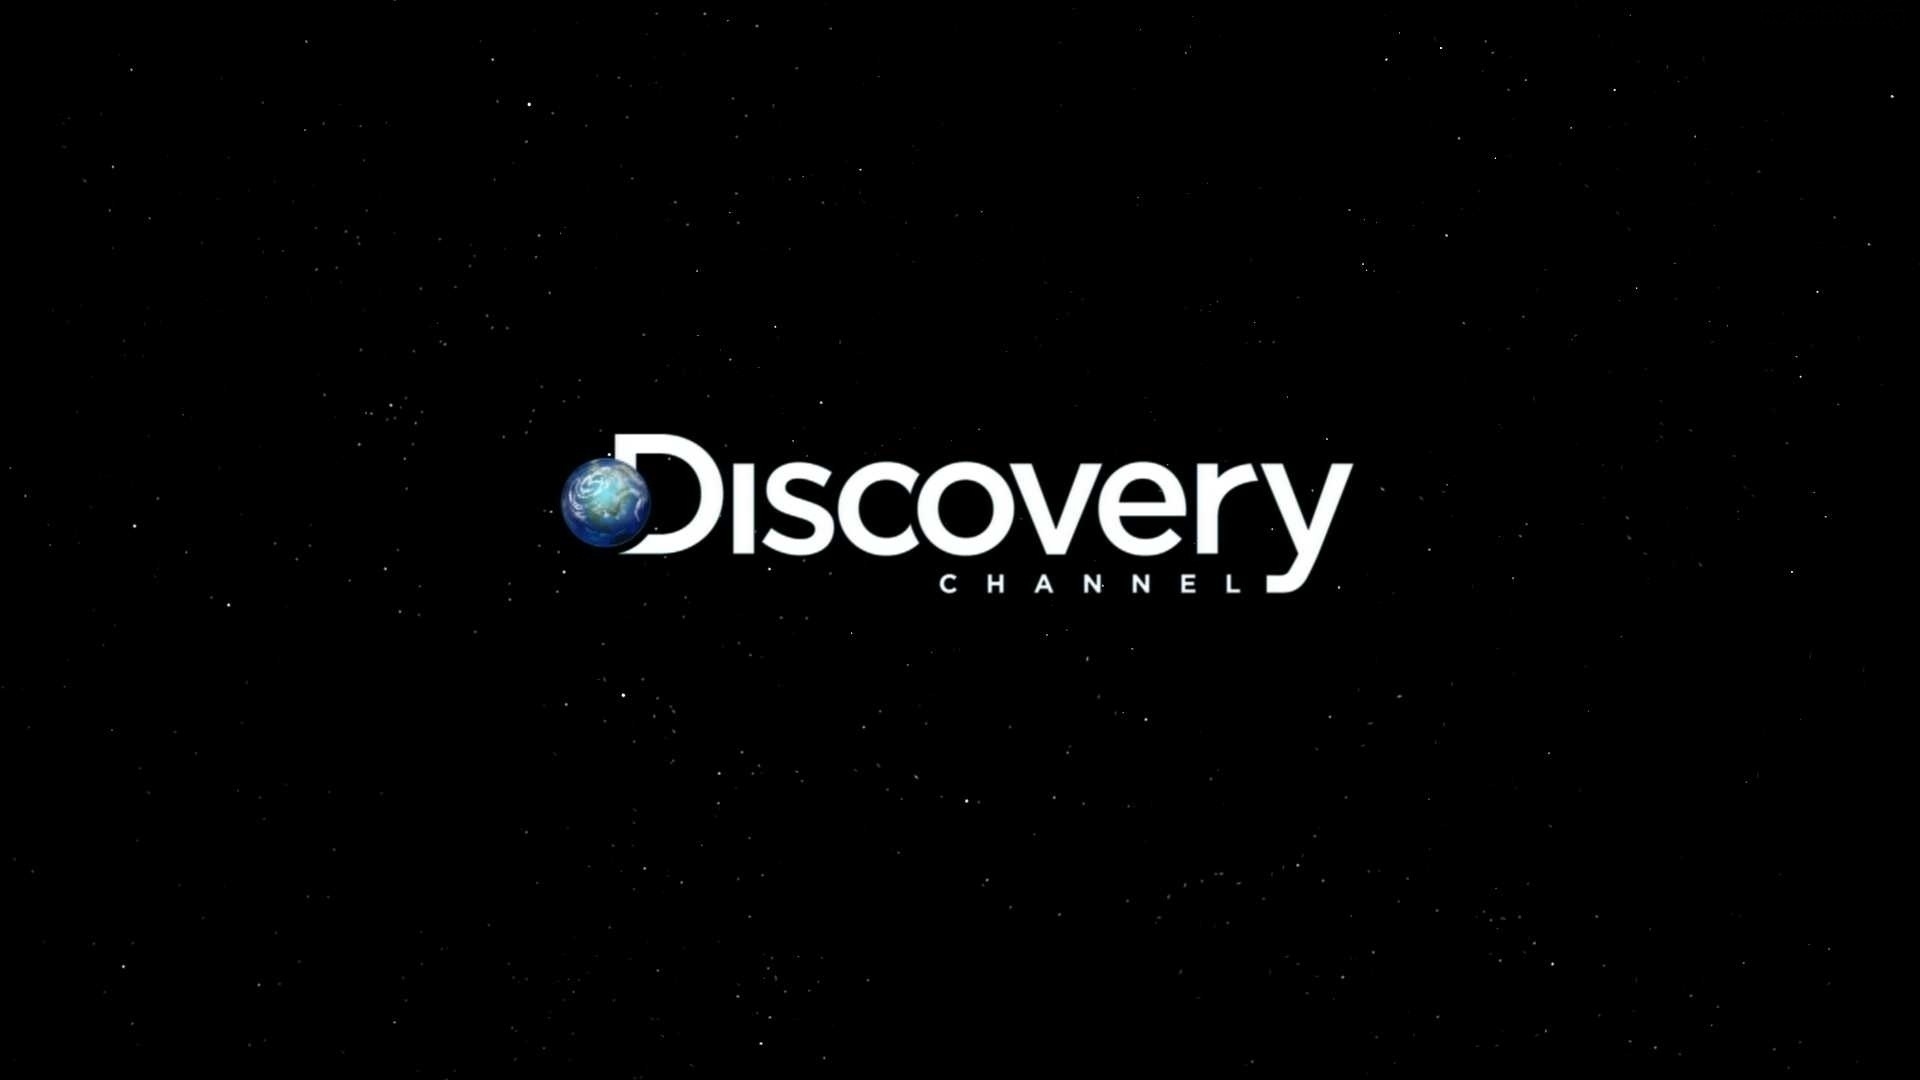 Покажи дискавери. Дискавери логотип. Дискавери заставка. Дискавери канал. Логотип телеканала Discovery.